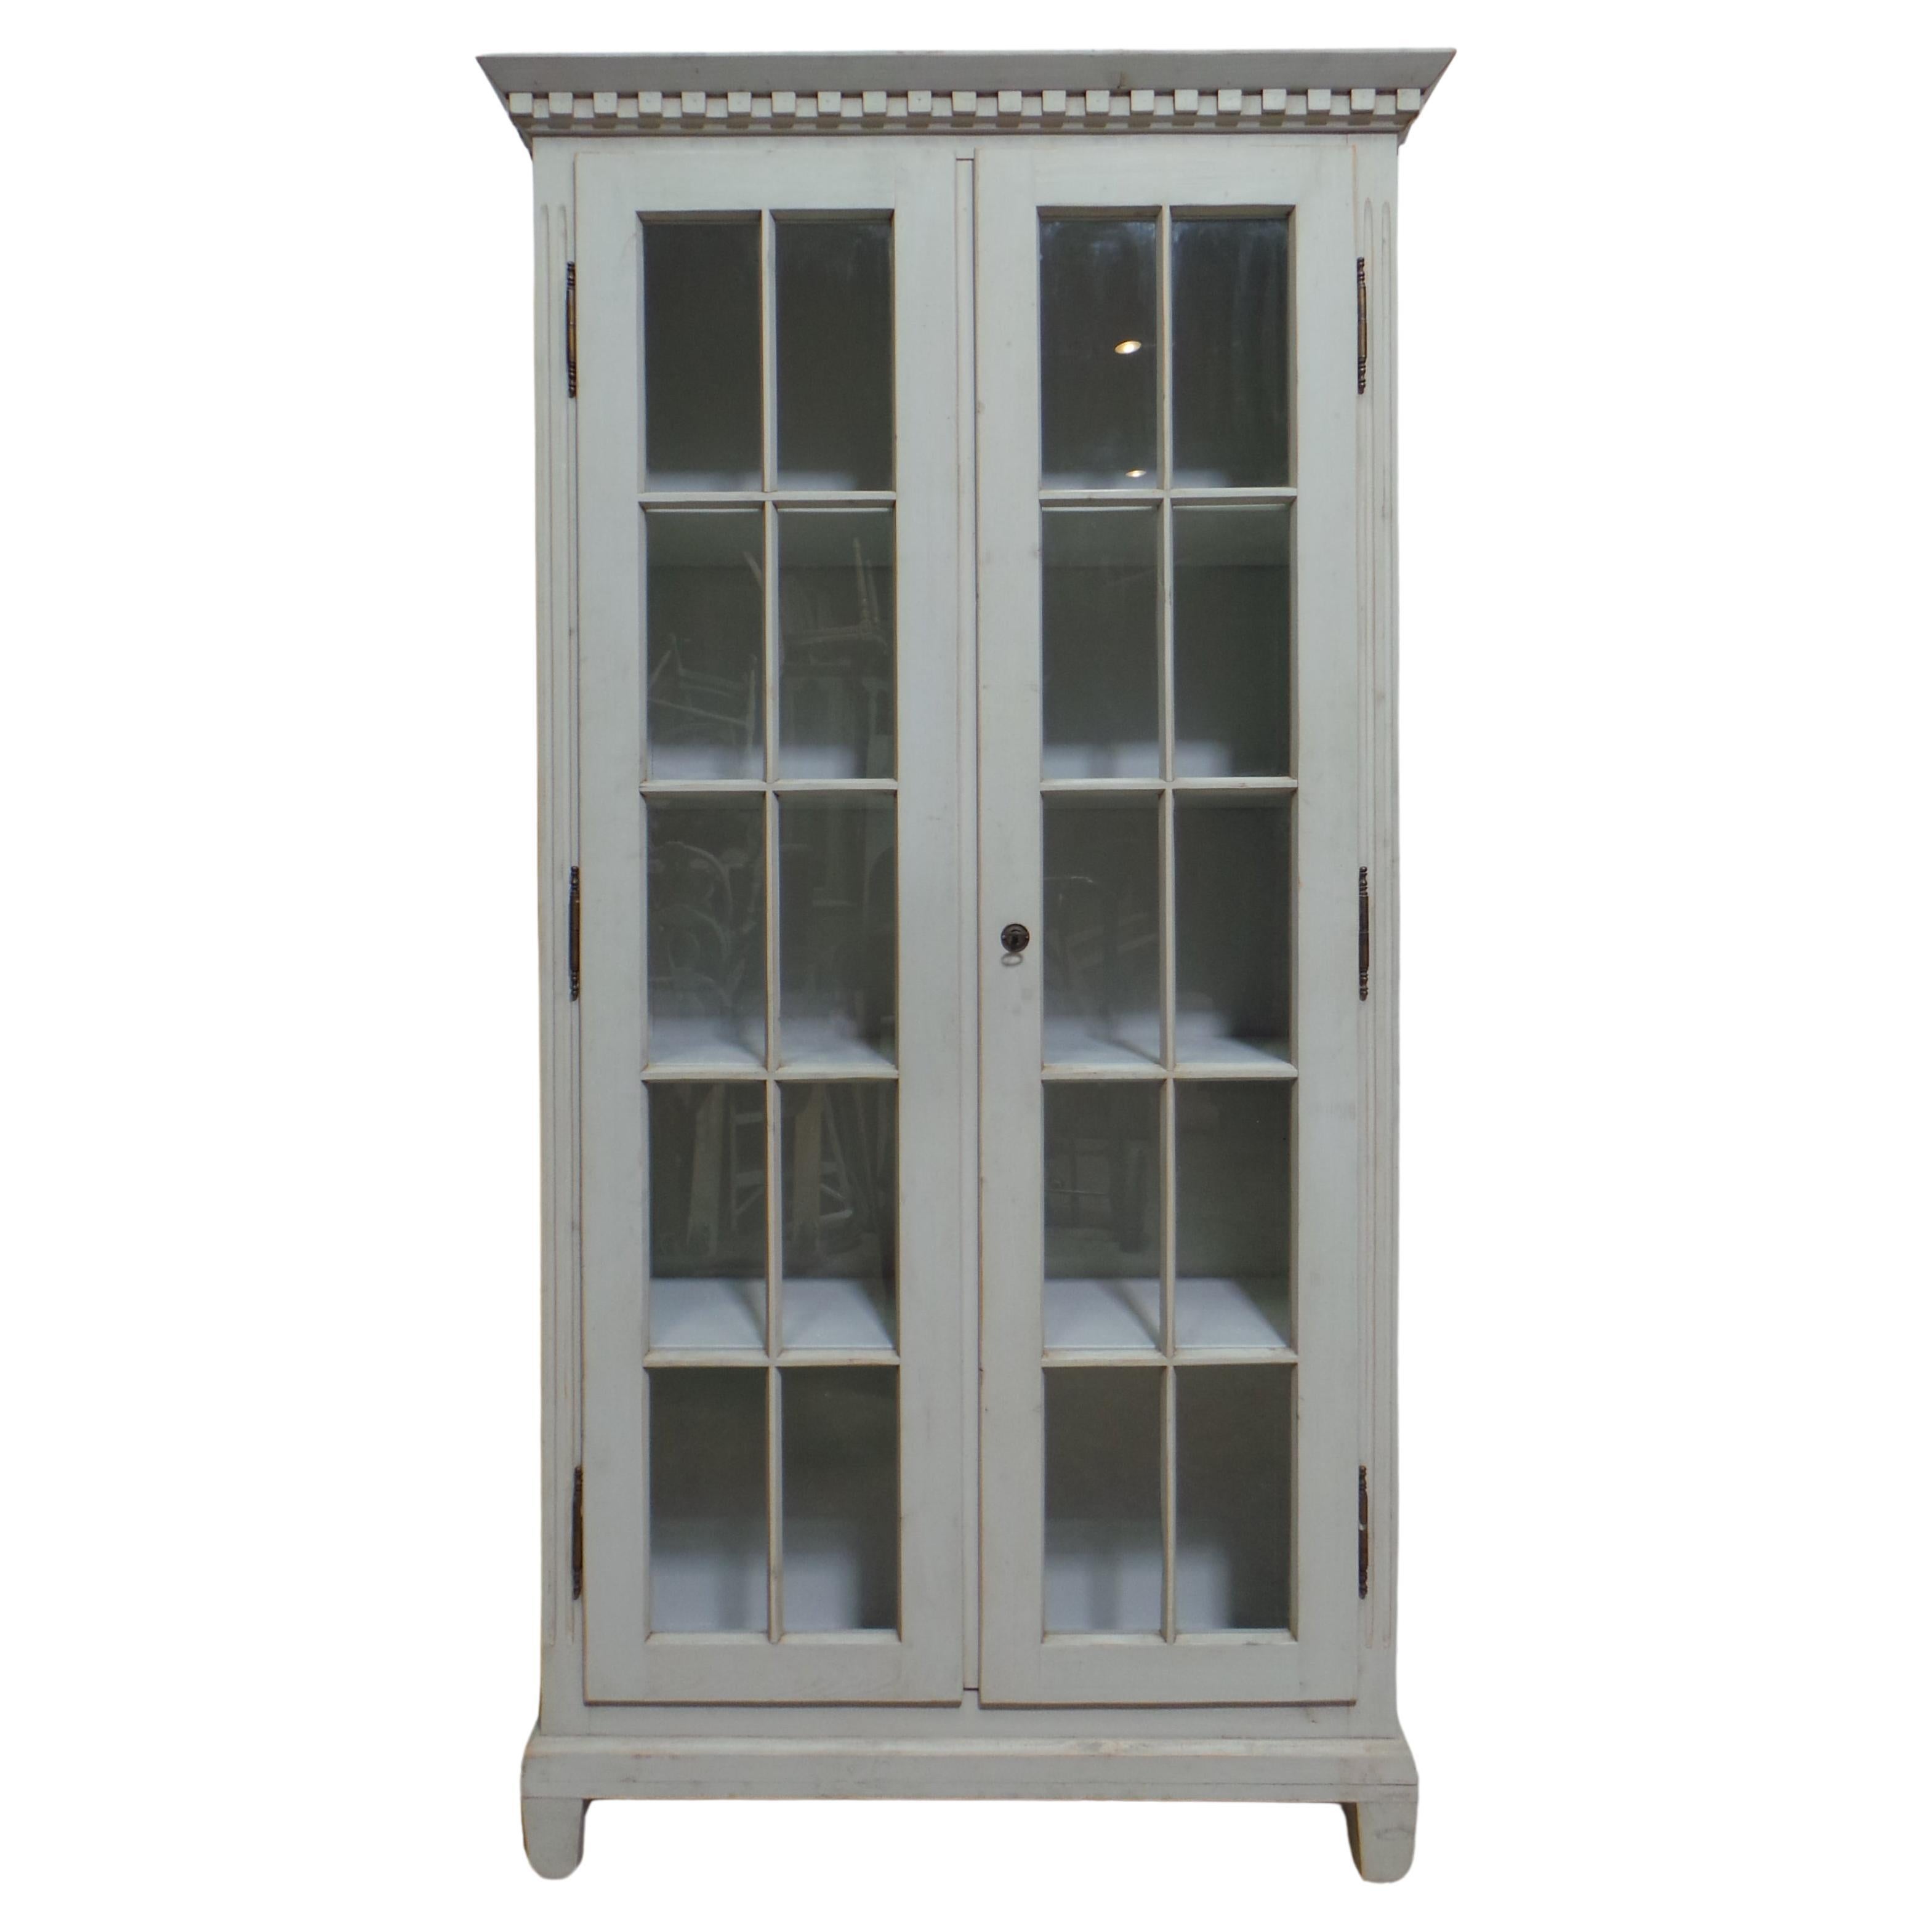 Gustavian Style 2 door display cabinet / Vitrine